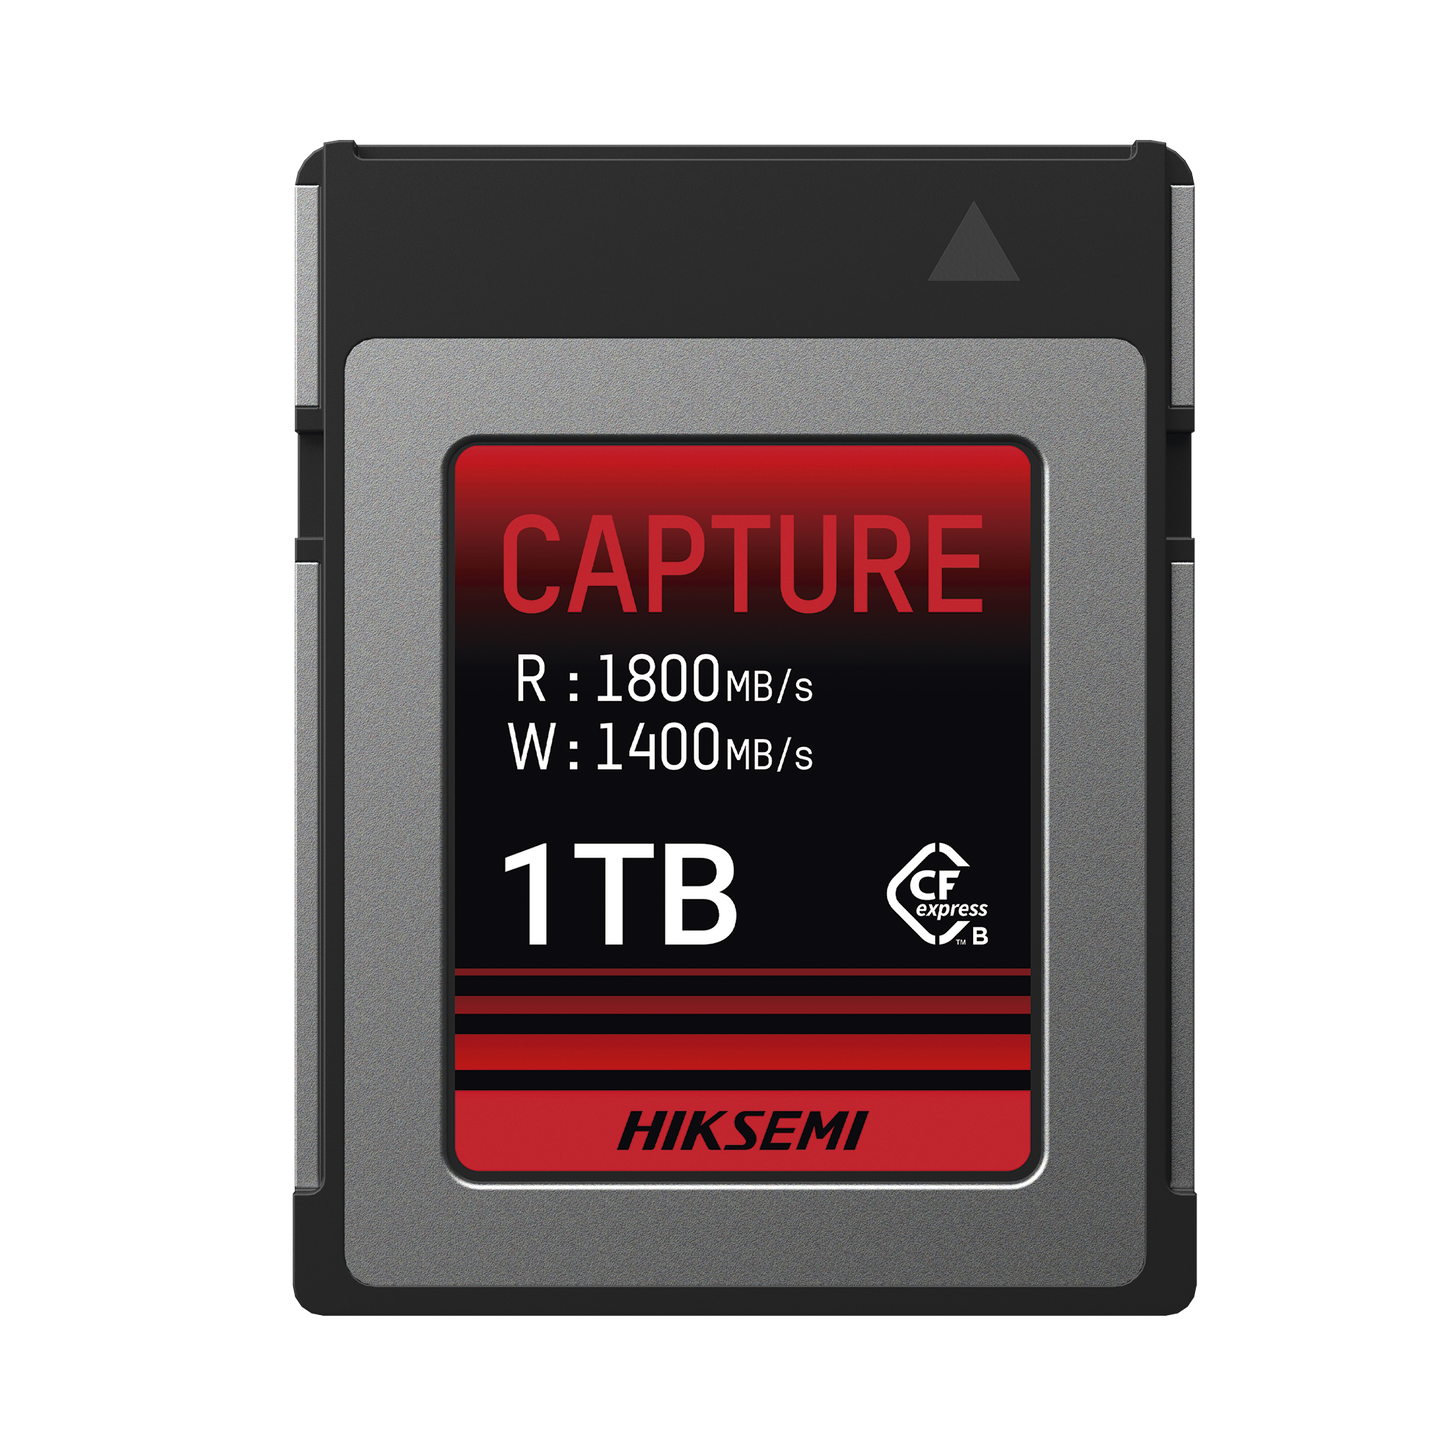 Memoria CFexpress tipo B / Clase 10 de 1 TB  / Especializada para Cámaras de Fotografía y Video  / 1800 MB/s Lectura / 1600 MB/s Escritura